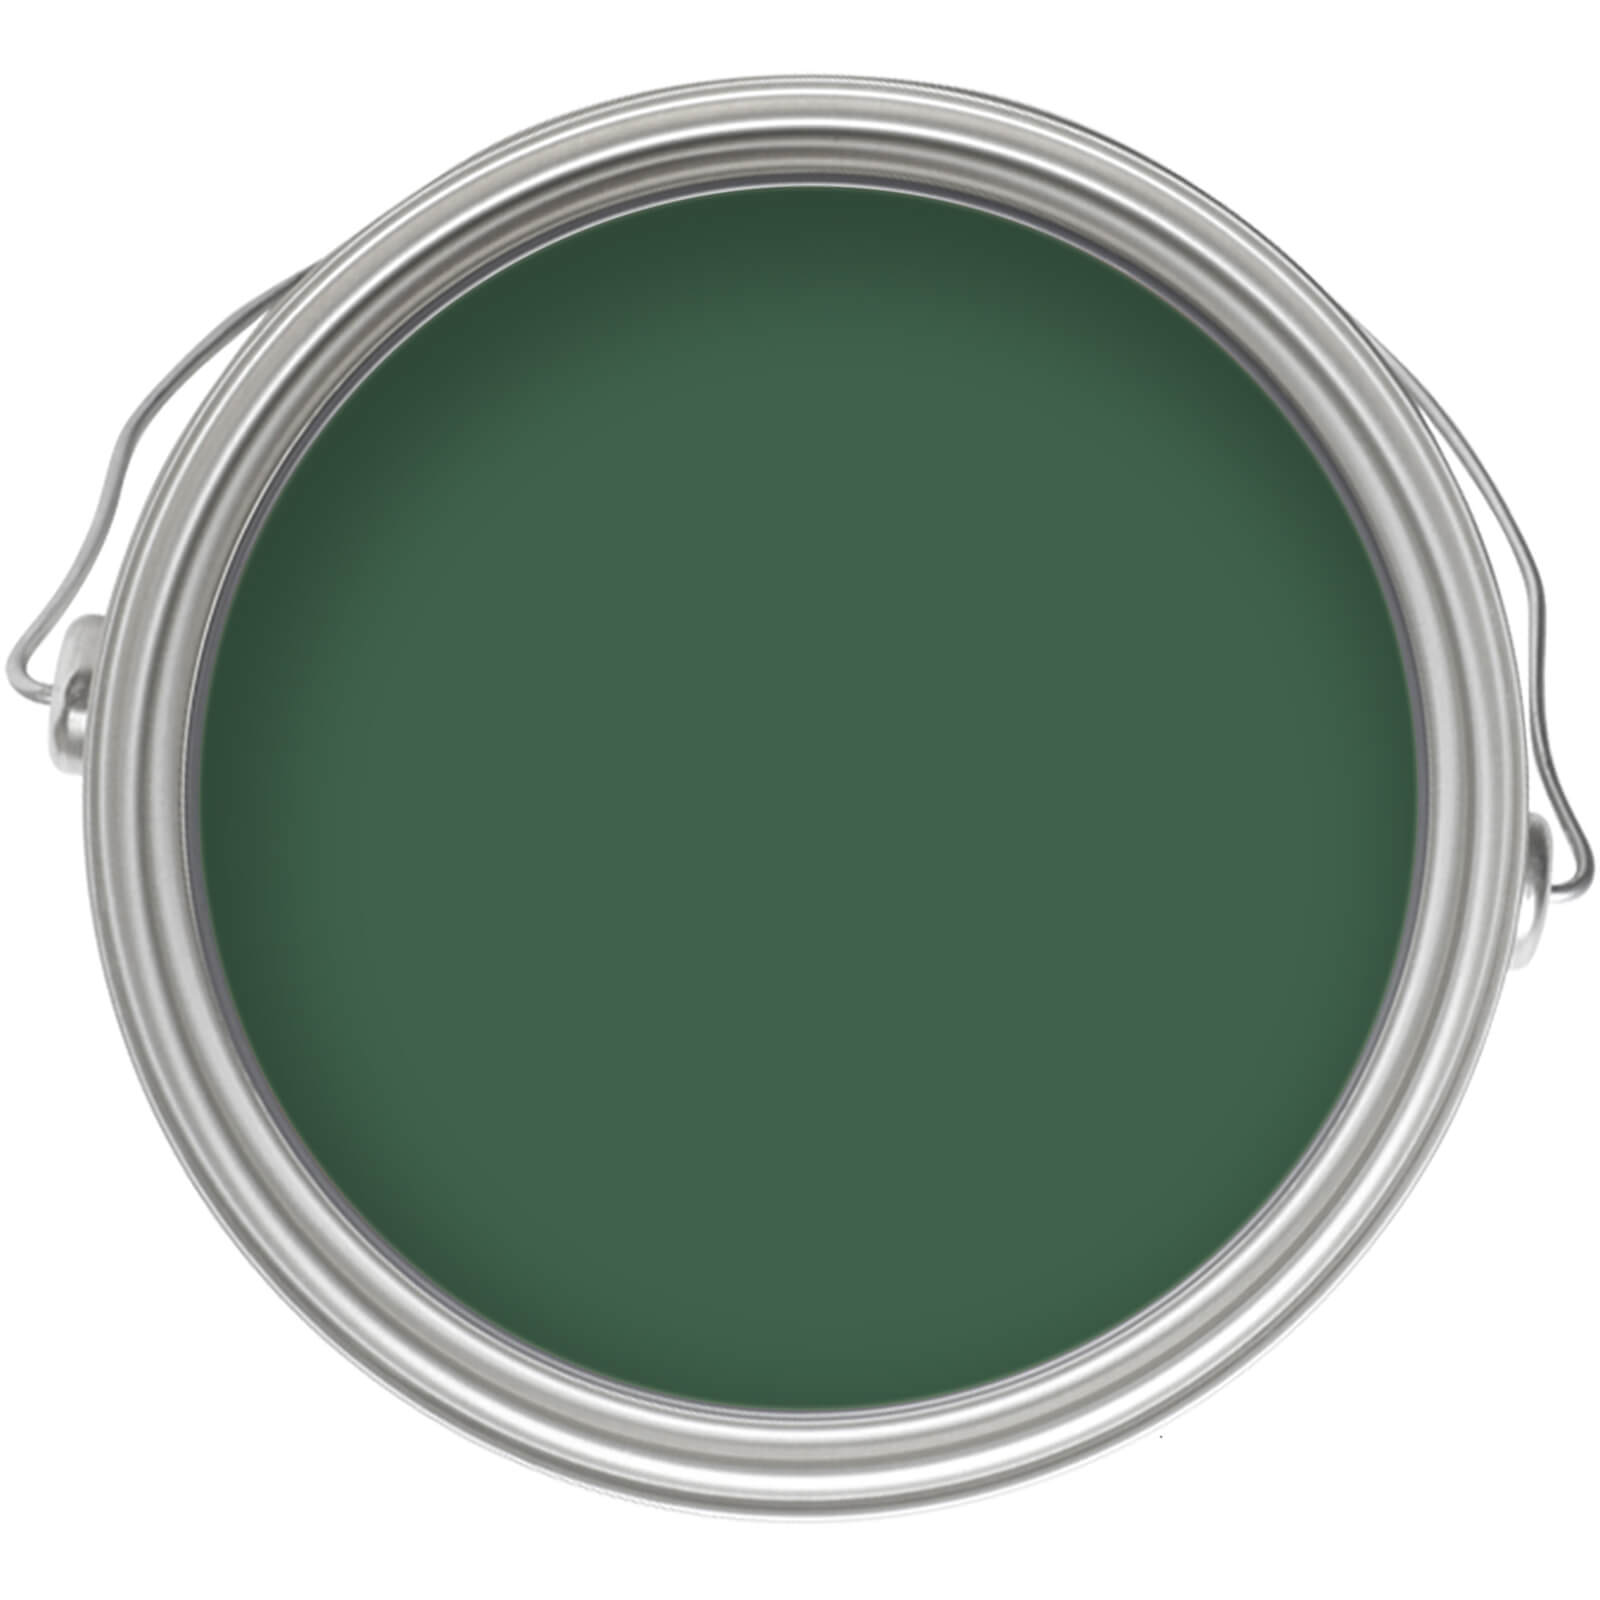 Homebase Exterior Gloss Paint - Empire Green 2.5L